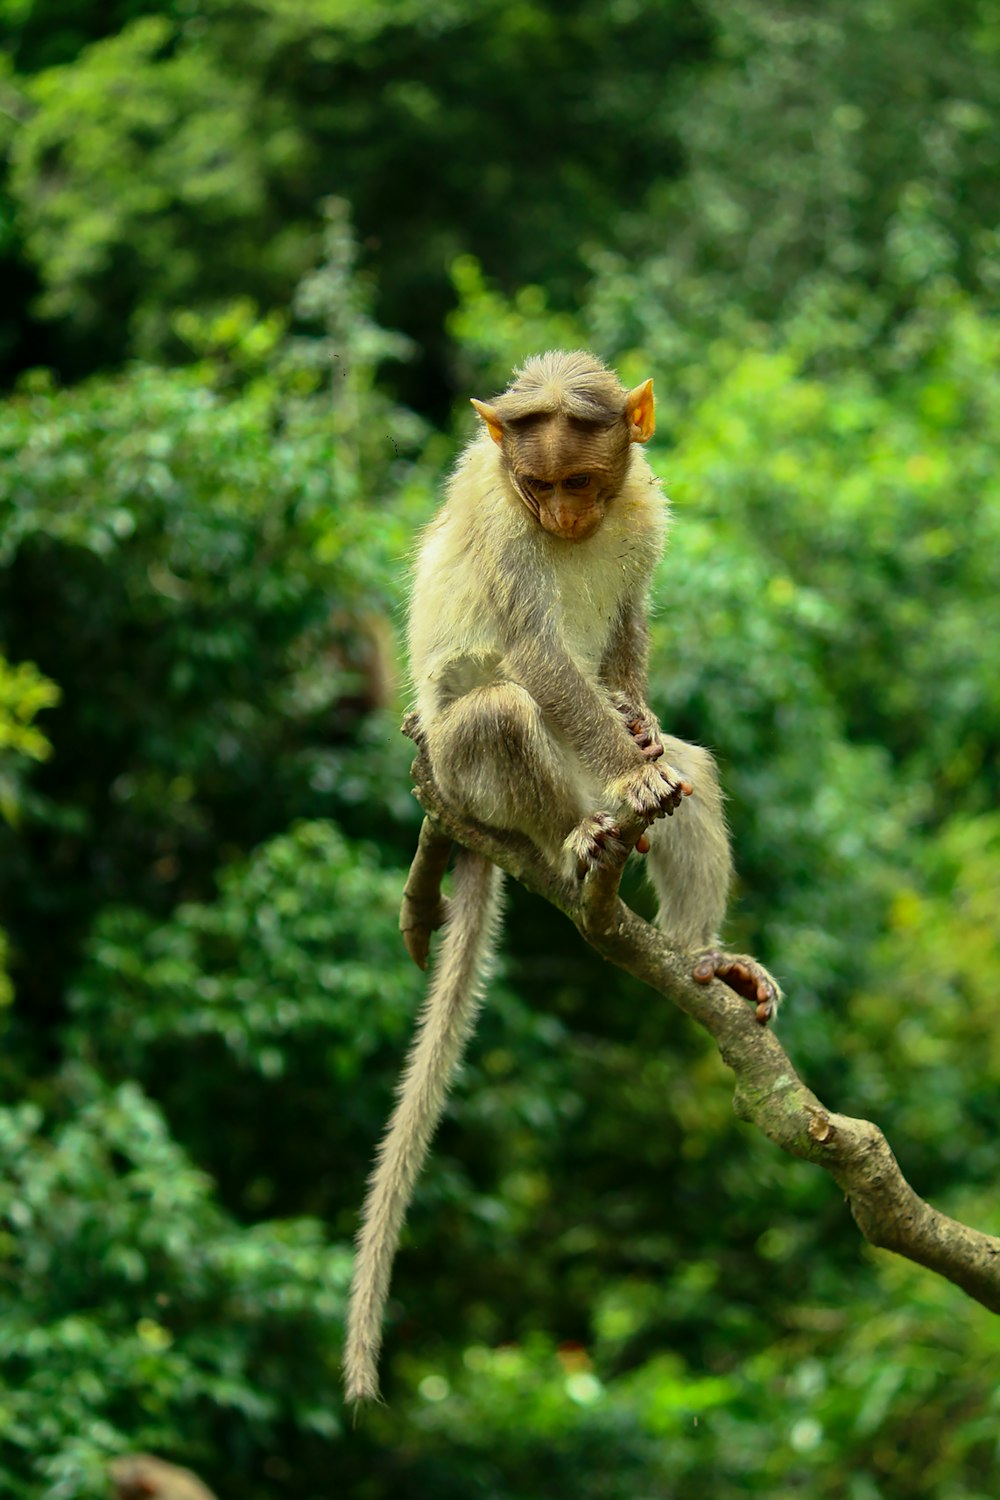 brown monkey on brown tree branch during daytime